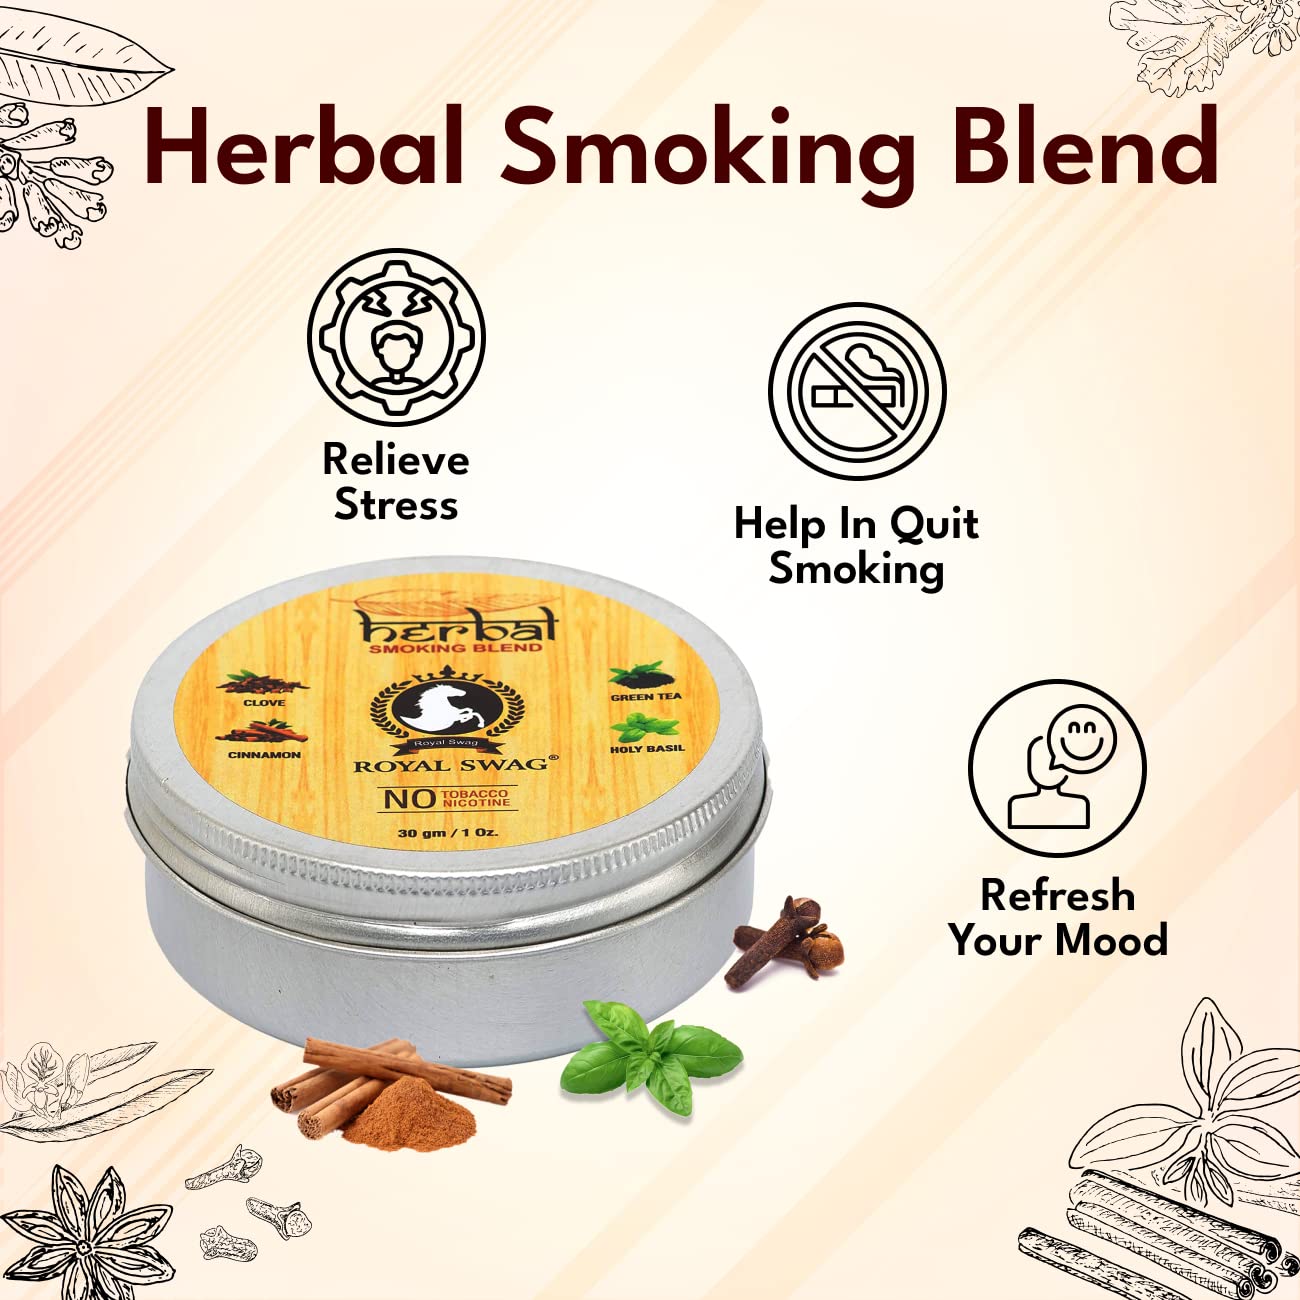 100% Tobacco-Free & Nicotine-Free Smoking Mixture With 100% Natural & Ayurvedic Herbal Smoking Blend 1 Pack (1 oz/ 30g) With Wooden Brown Pipe|Helps To Quit Smoking (Smoking Cessation)